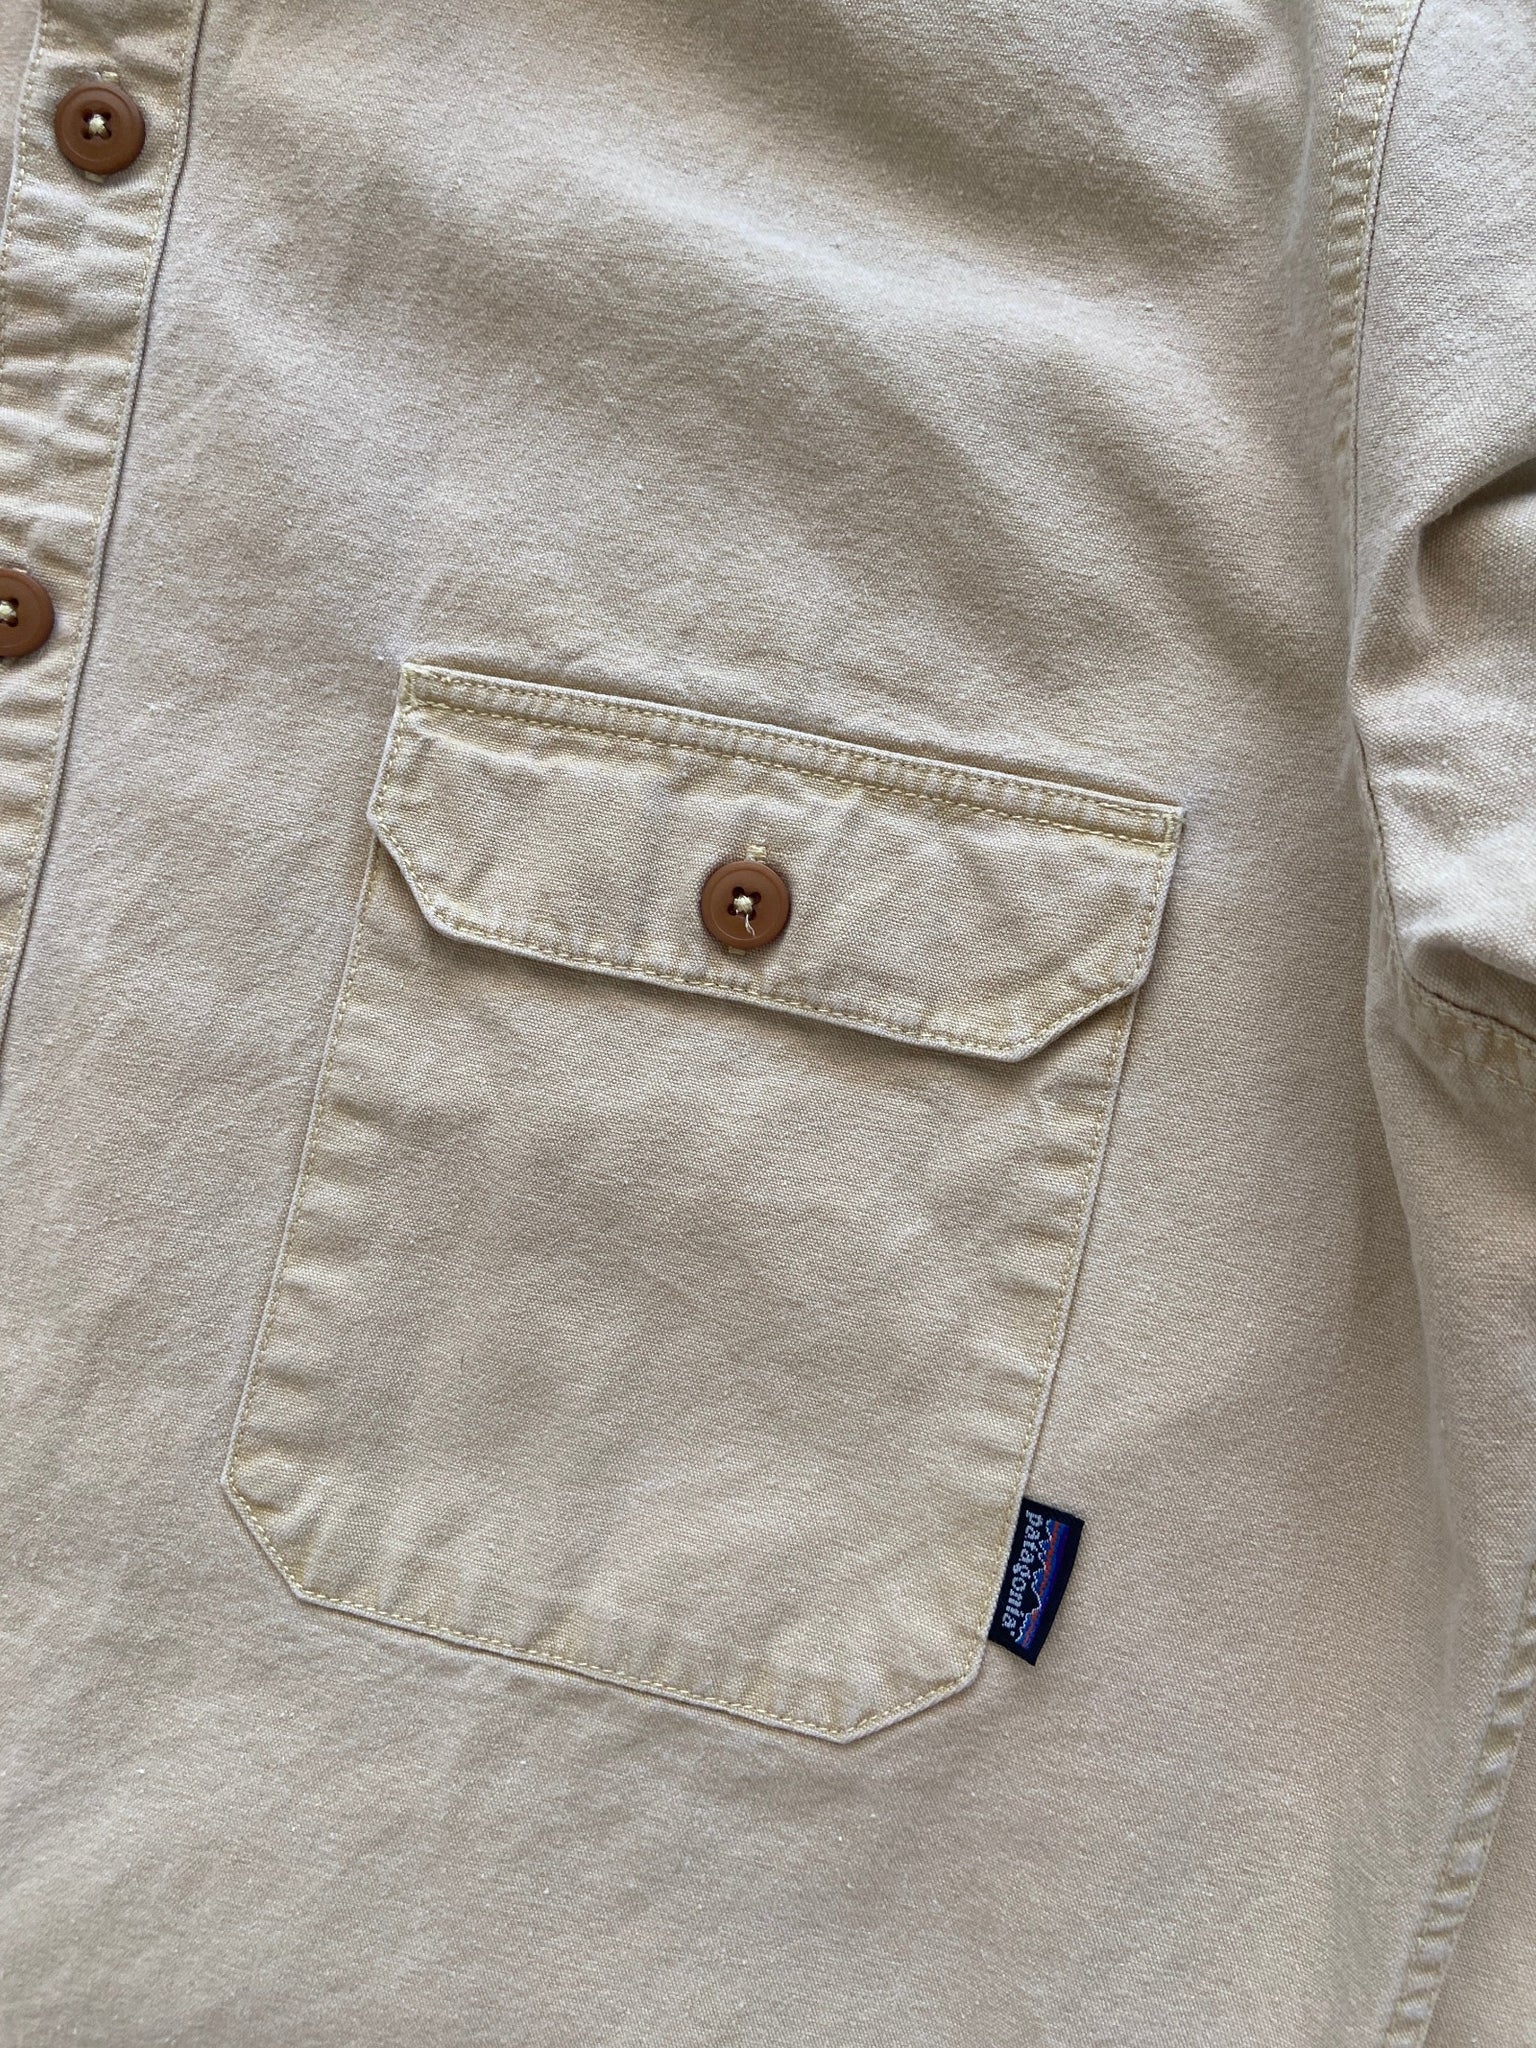 1990's Patagonia Pocket Shirt - L